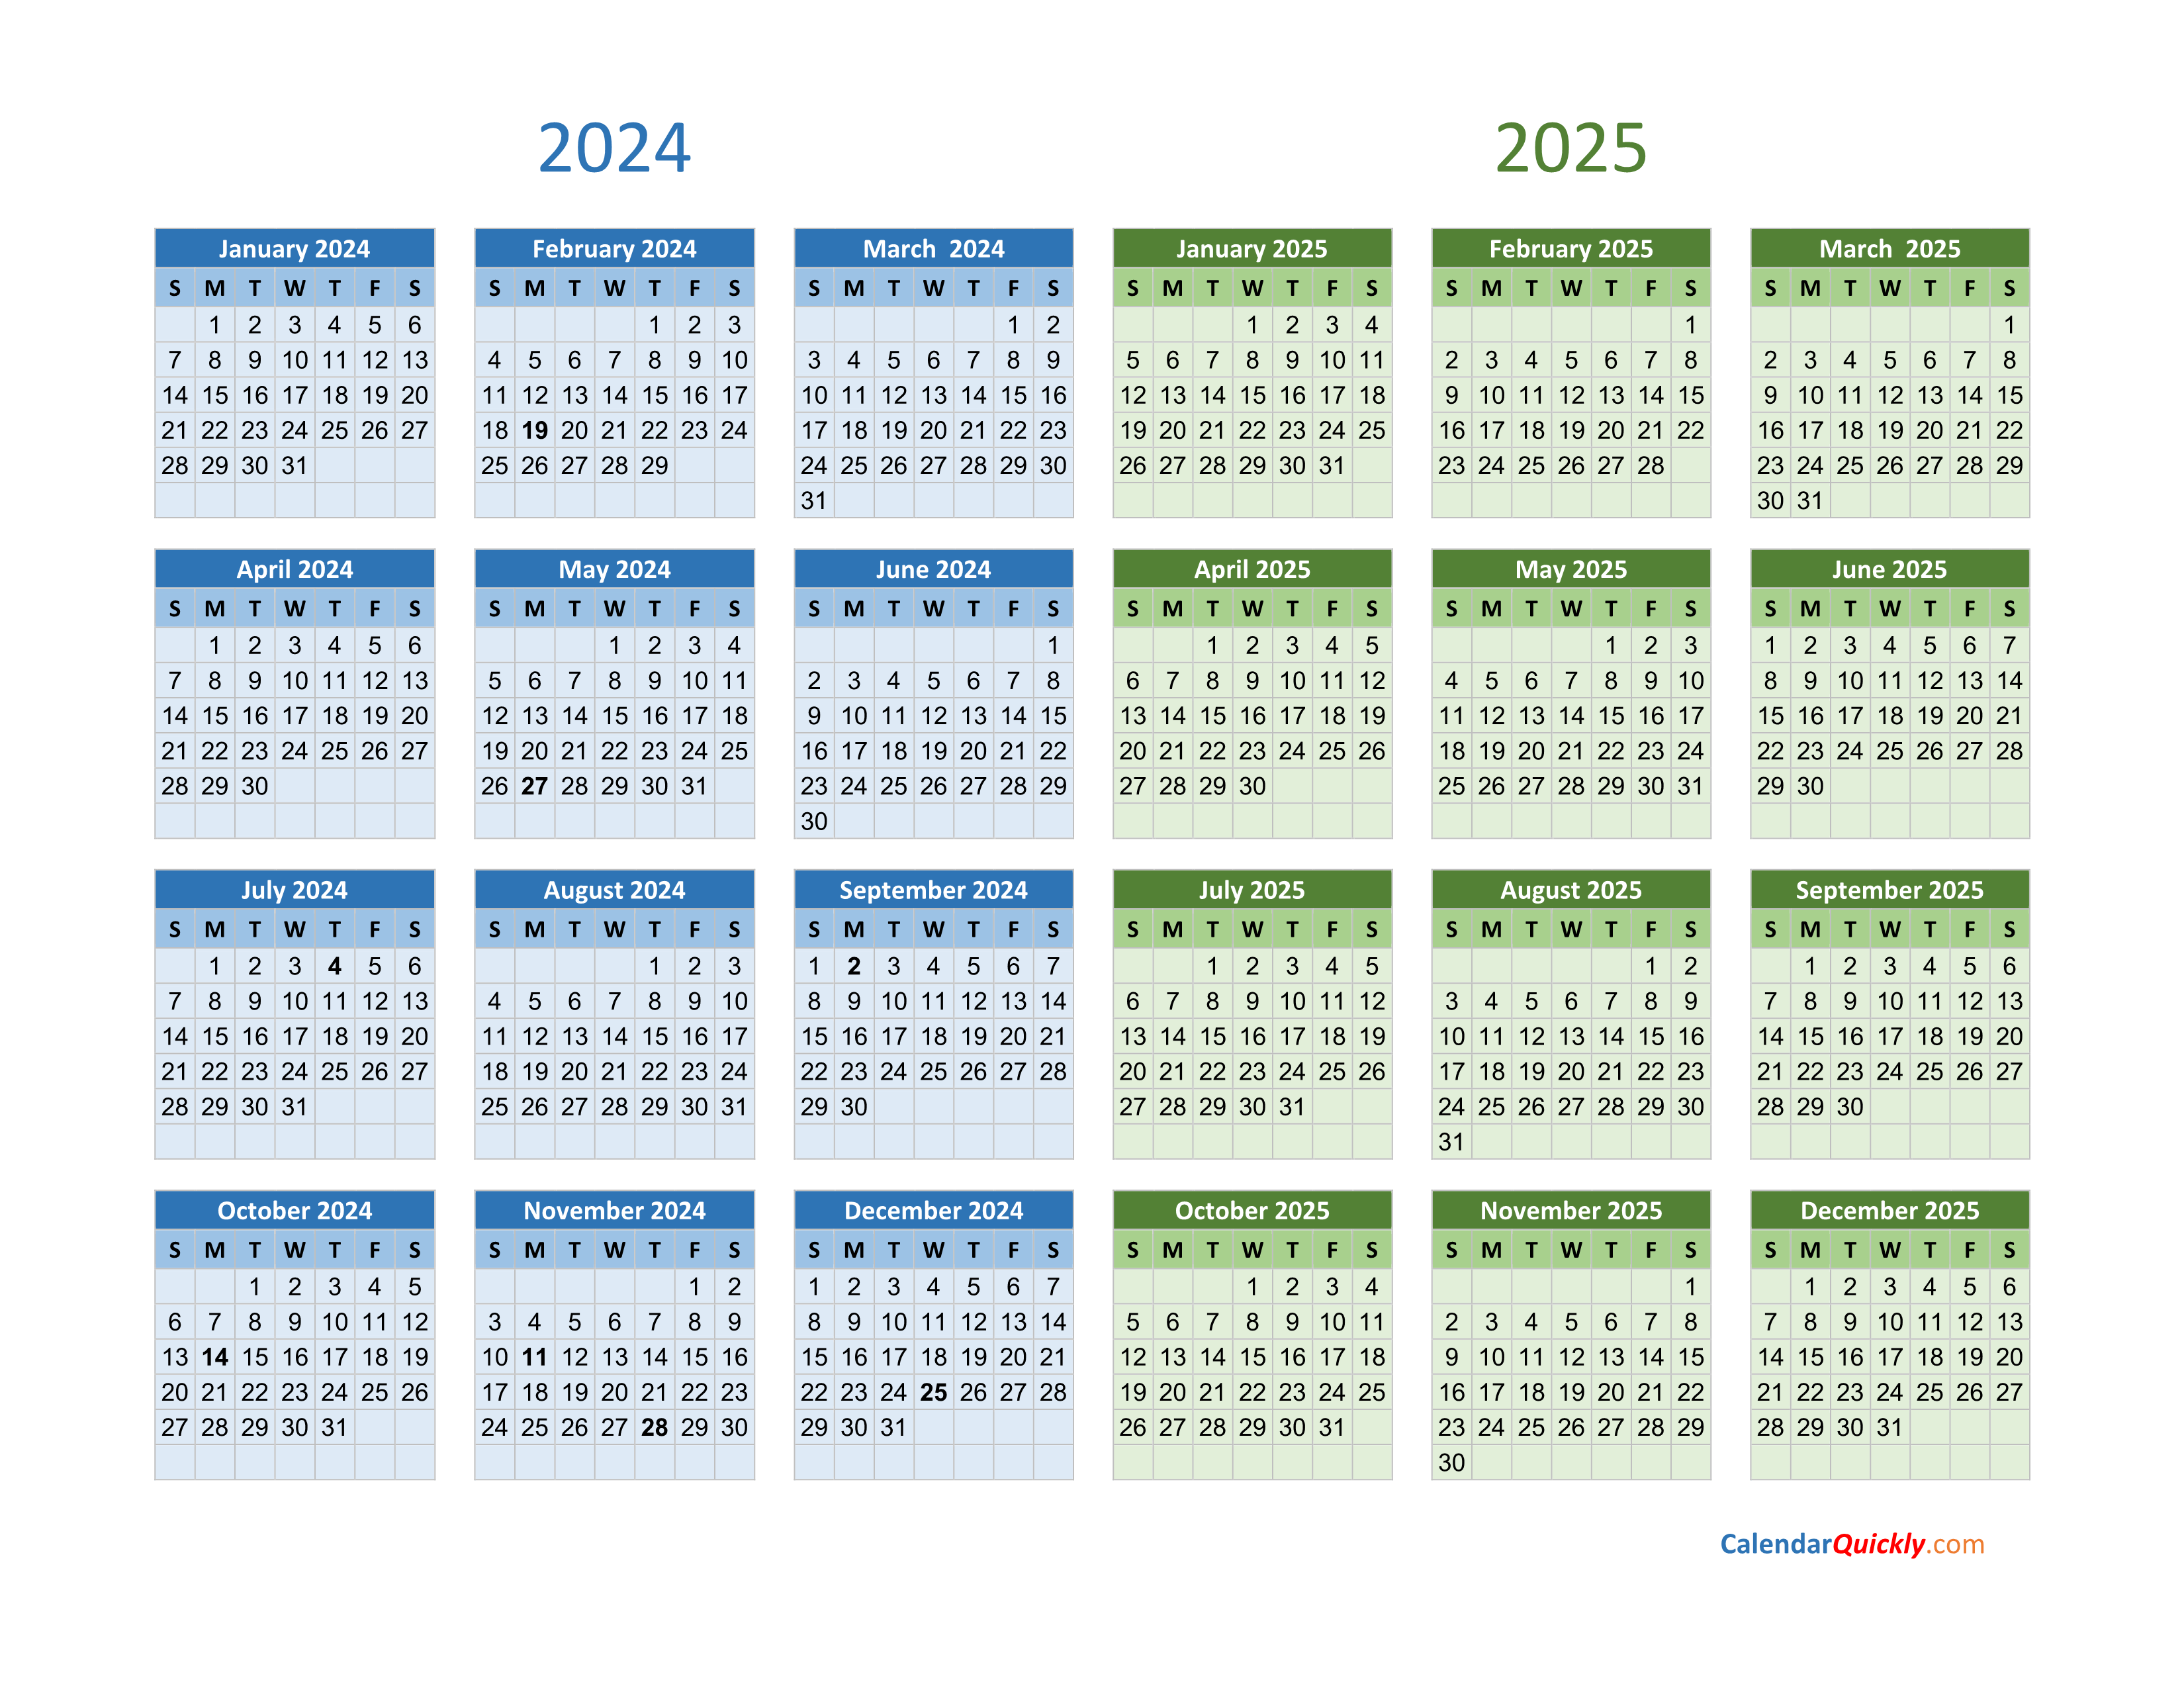 2024-and-2025-calendar-calendar-quickly